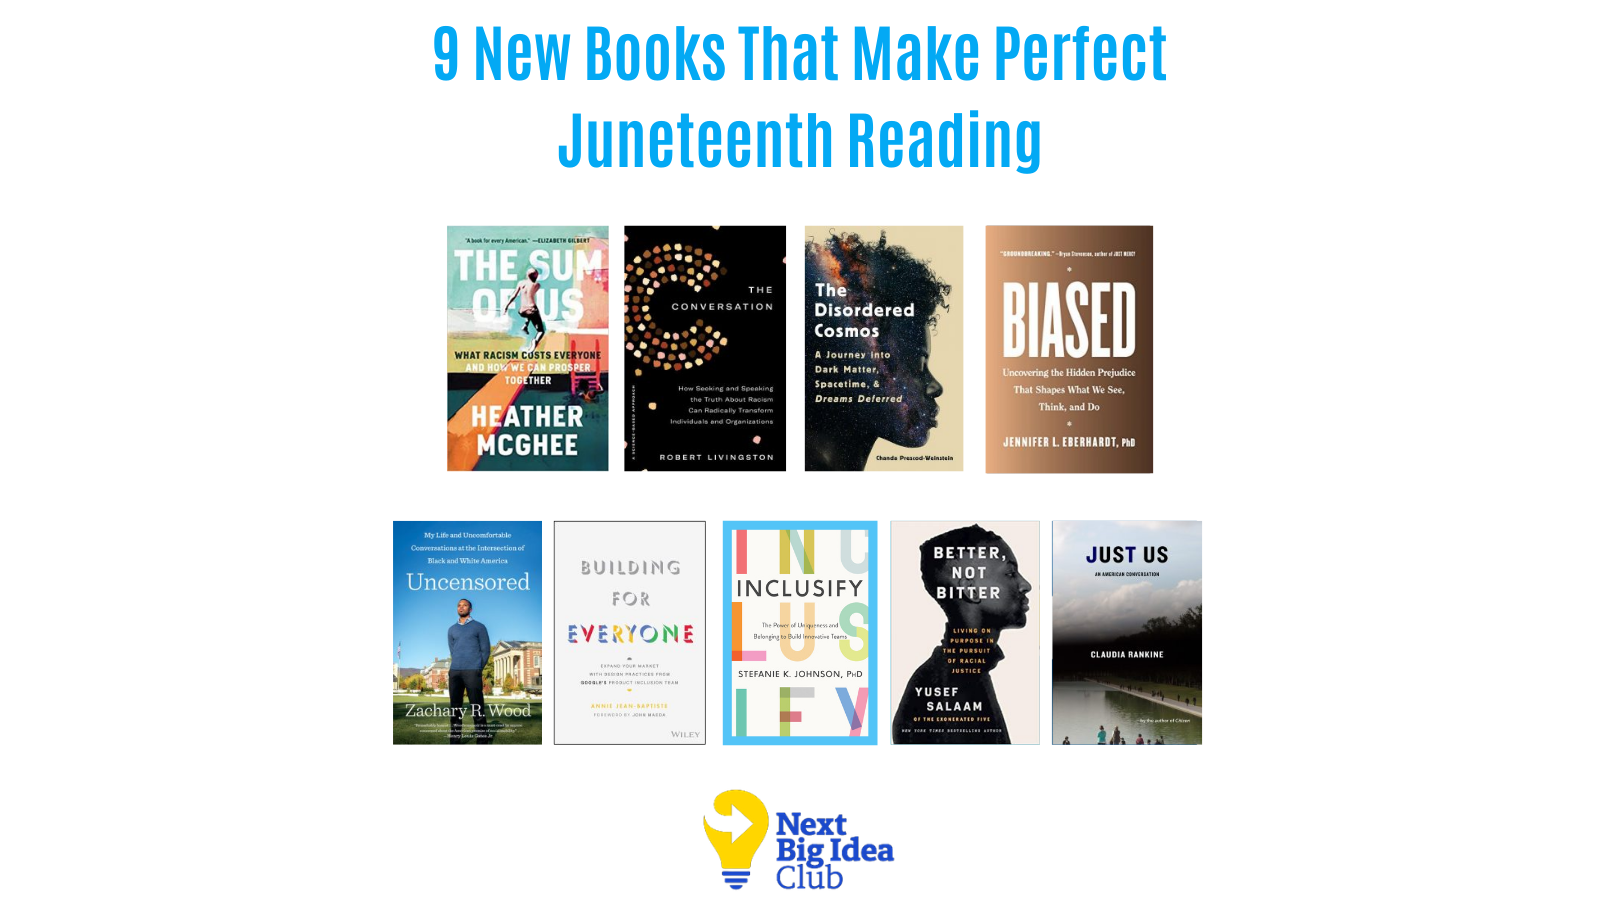 9 New Books That Make Perfect Juneteenth Reading Twitter Dr Stefanie K Johnson